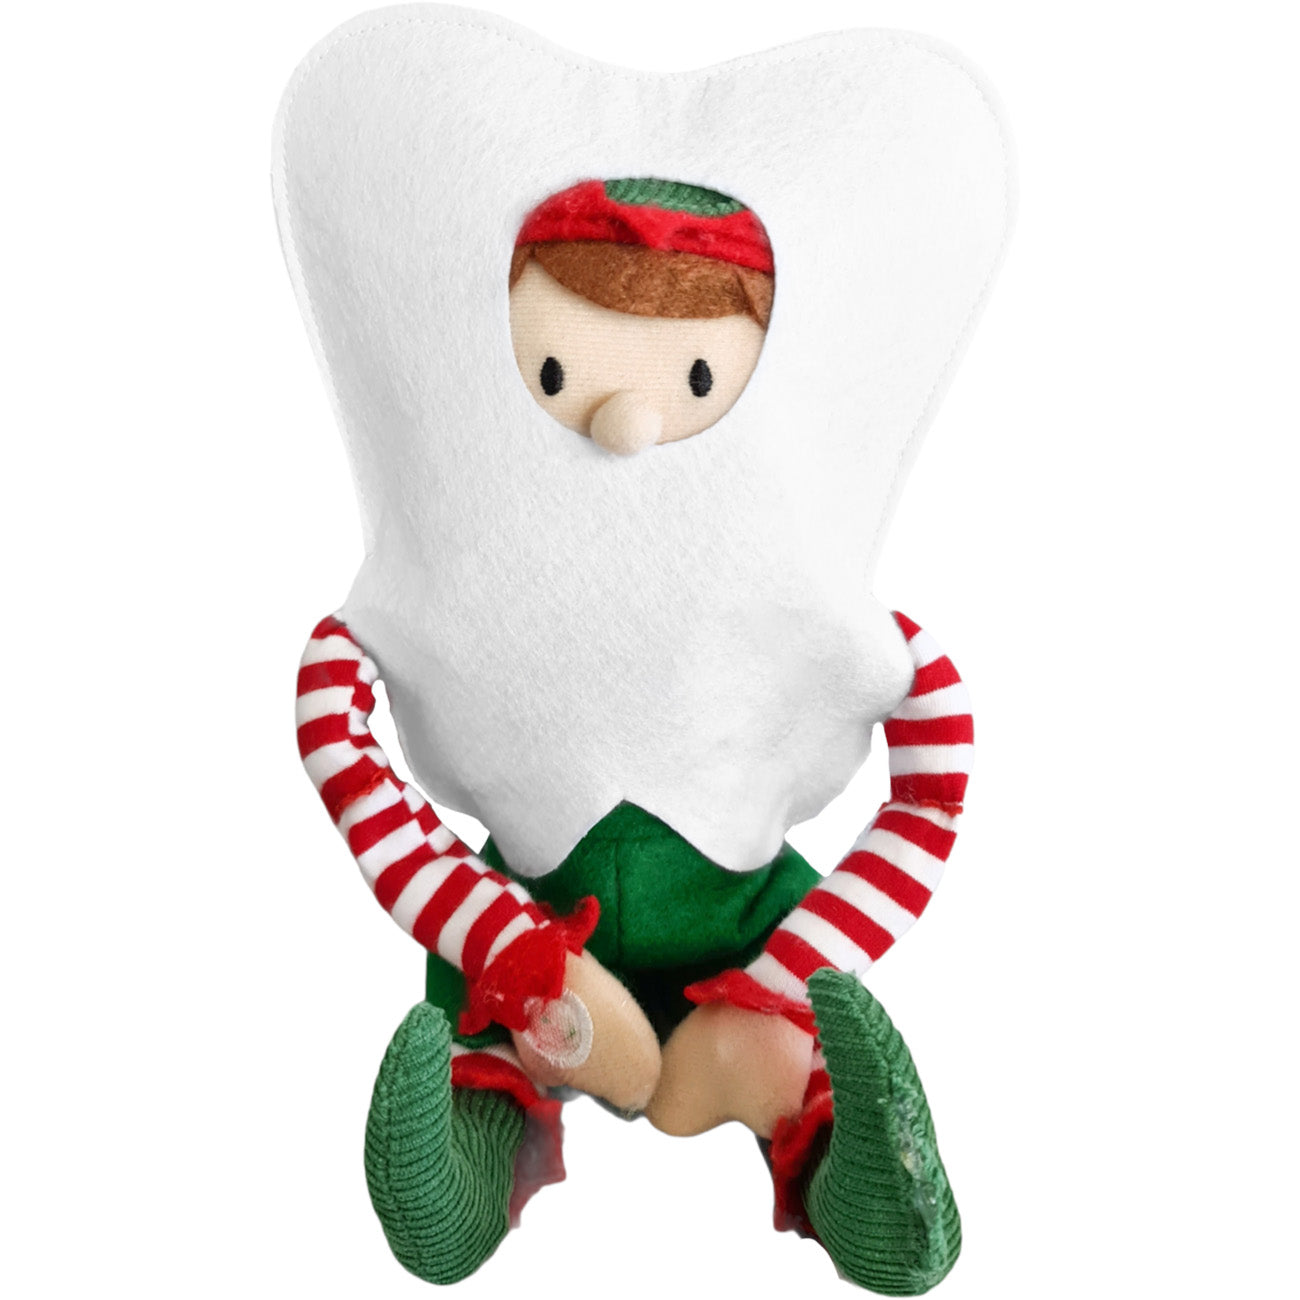 Tooth Elf costume